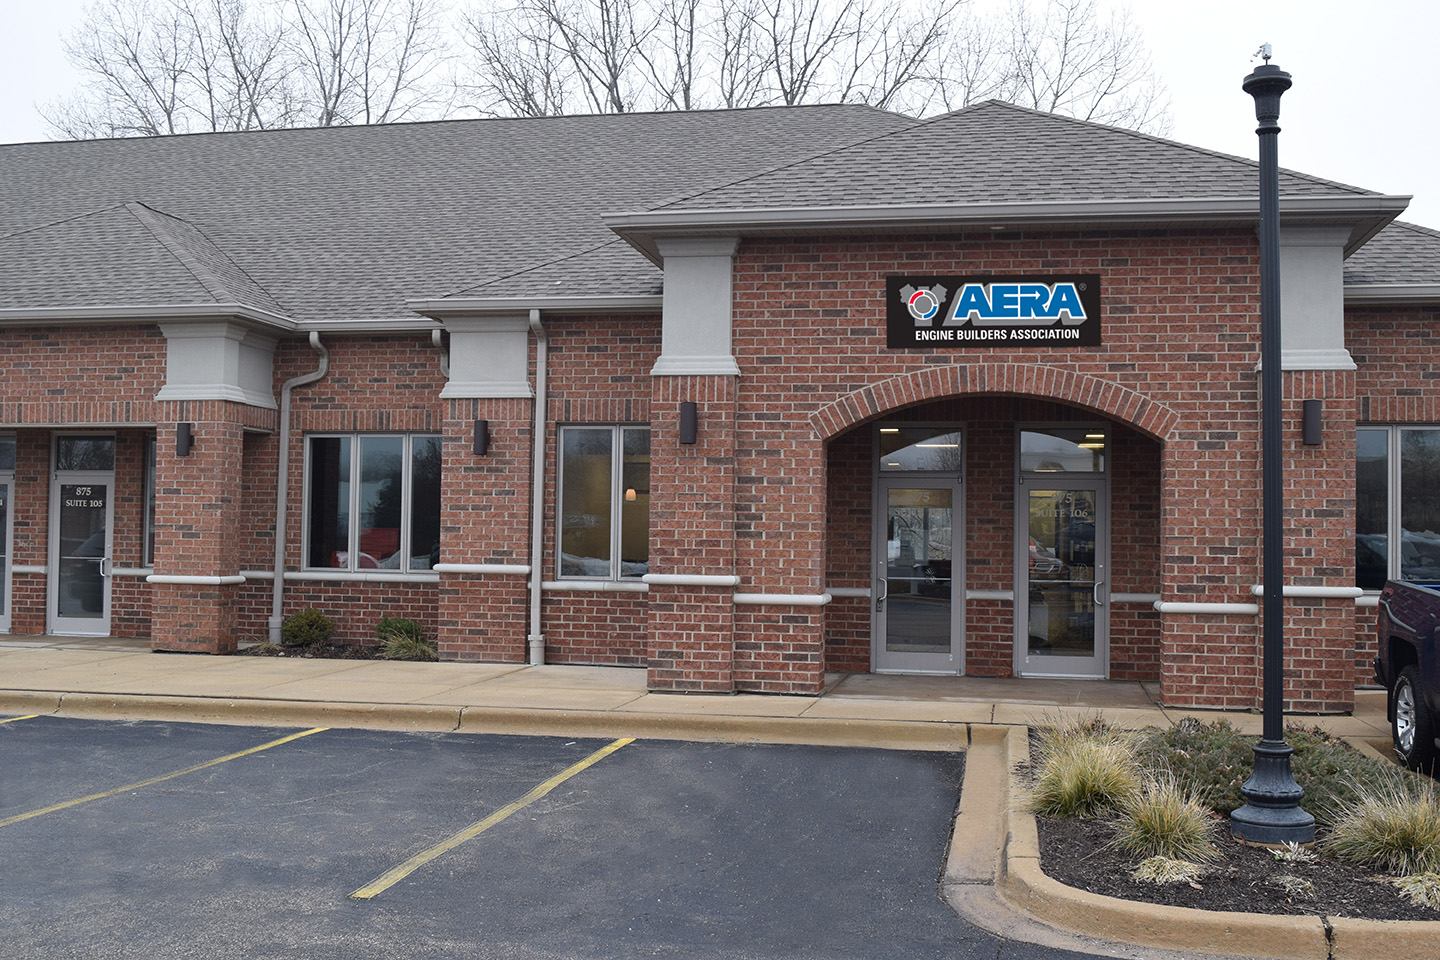 AERA - Engine Builders Association